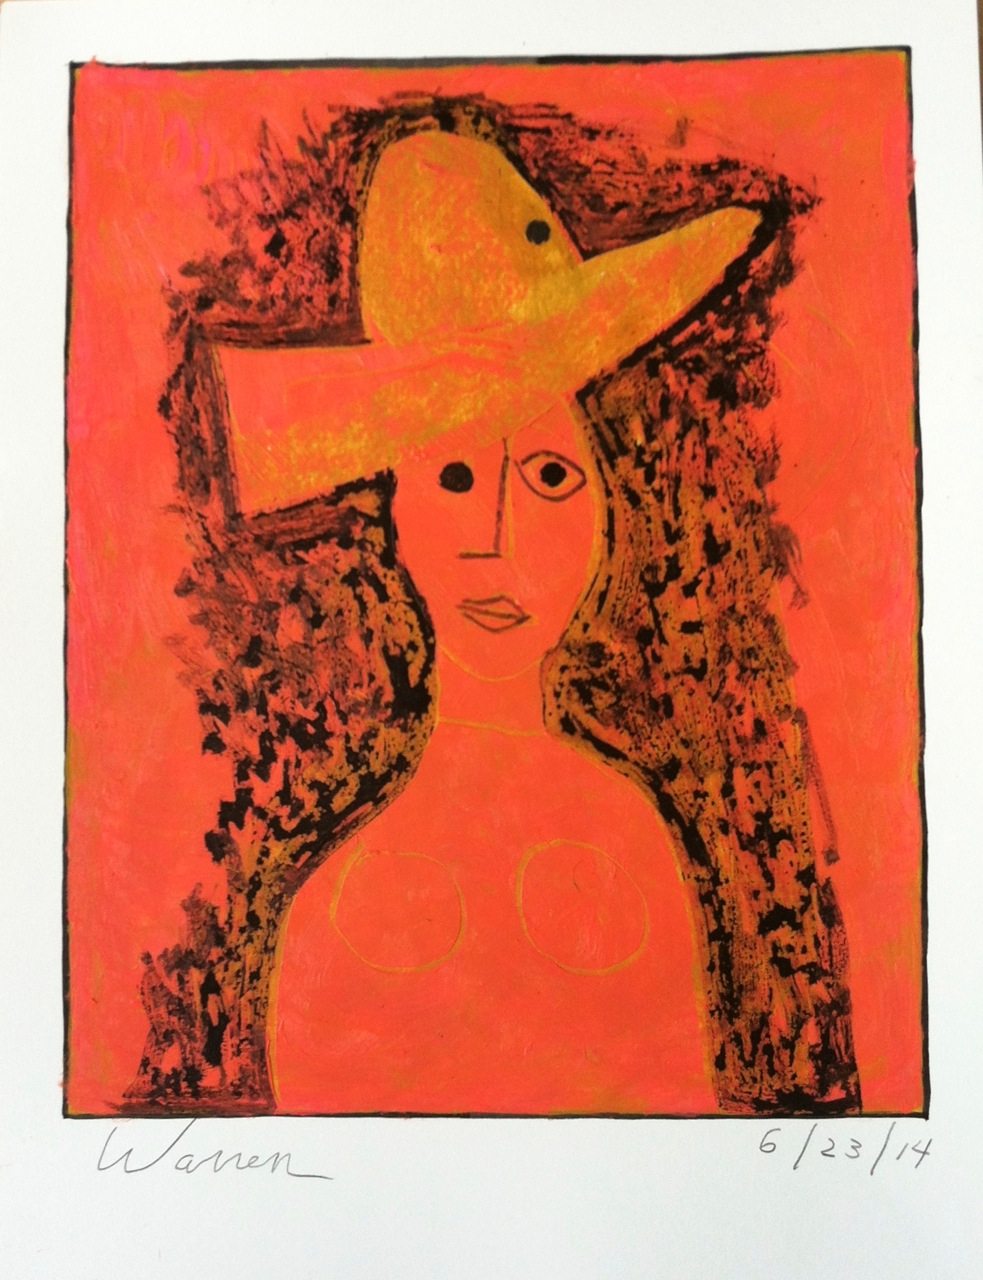 Woman in a Hat by Russ Warren at Les Yeux du Monde Art Gallery